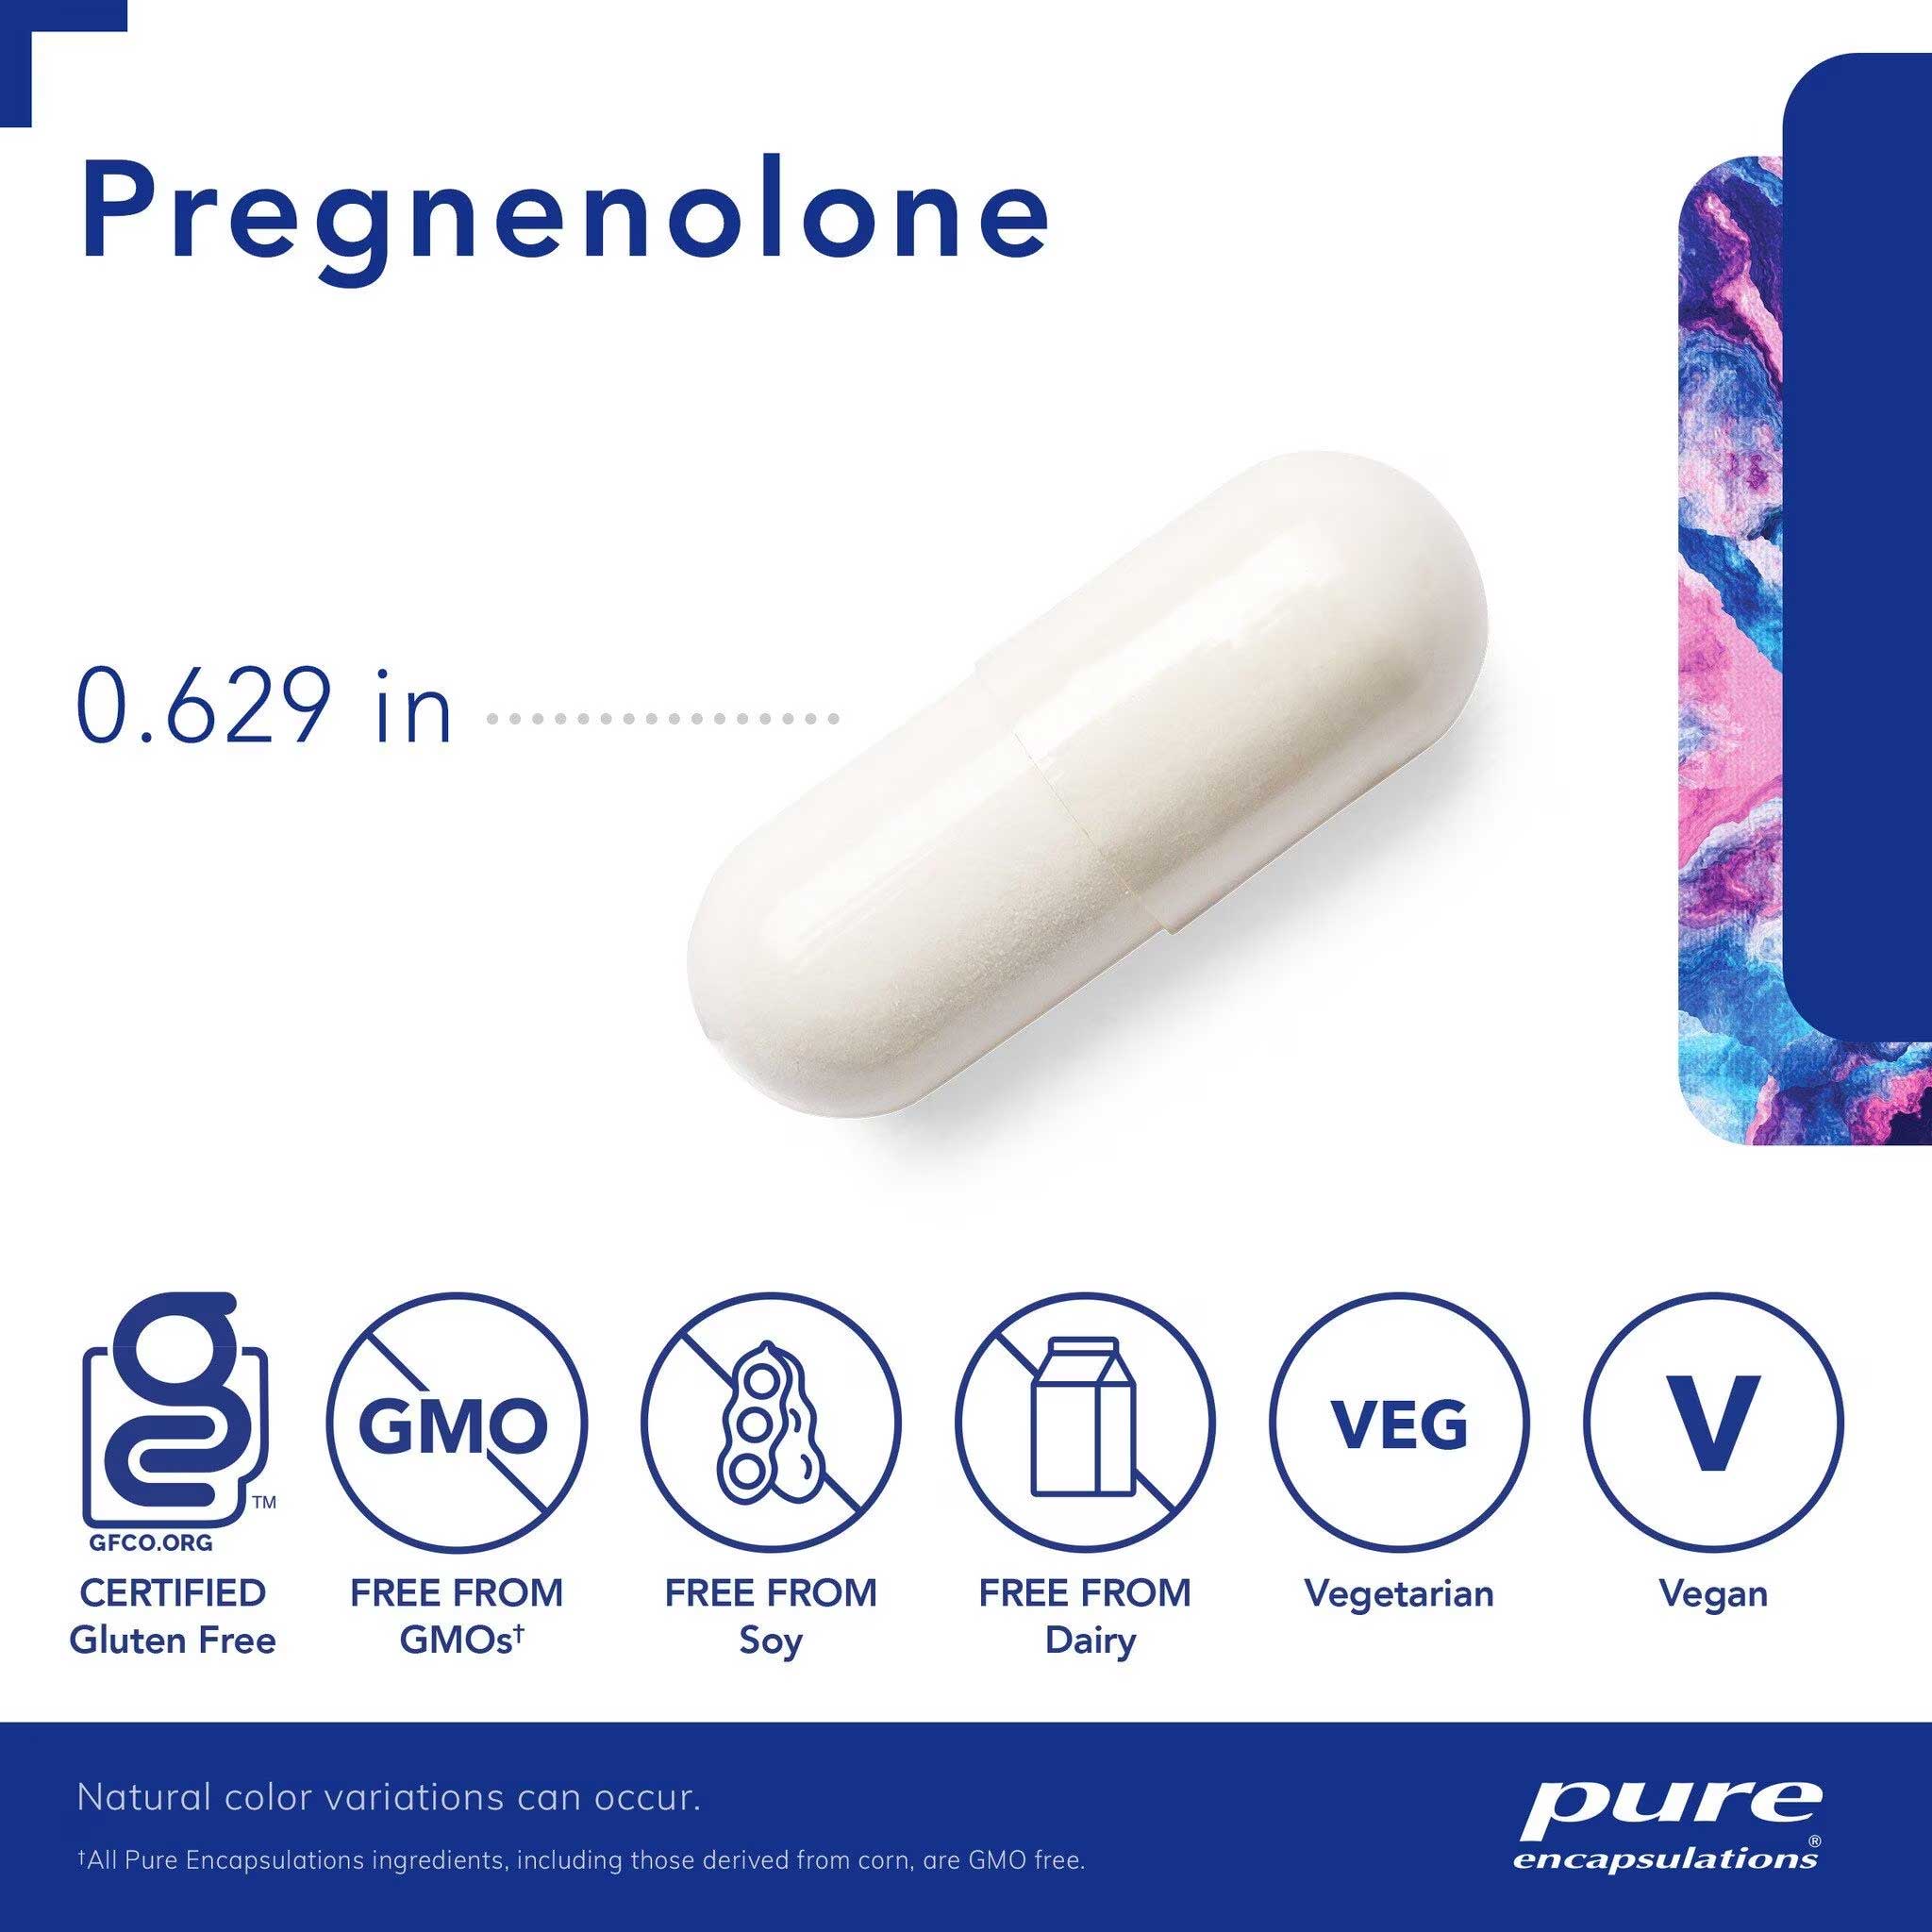 Pure Encapsulations Pregnenolone 30mg Capsules